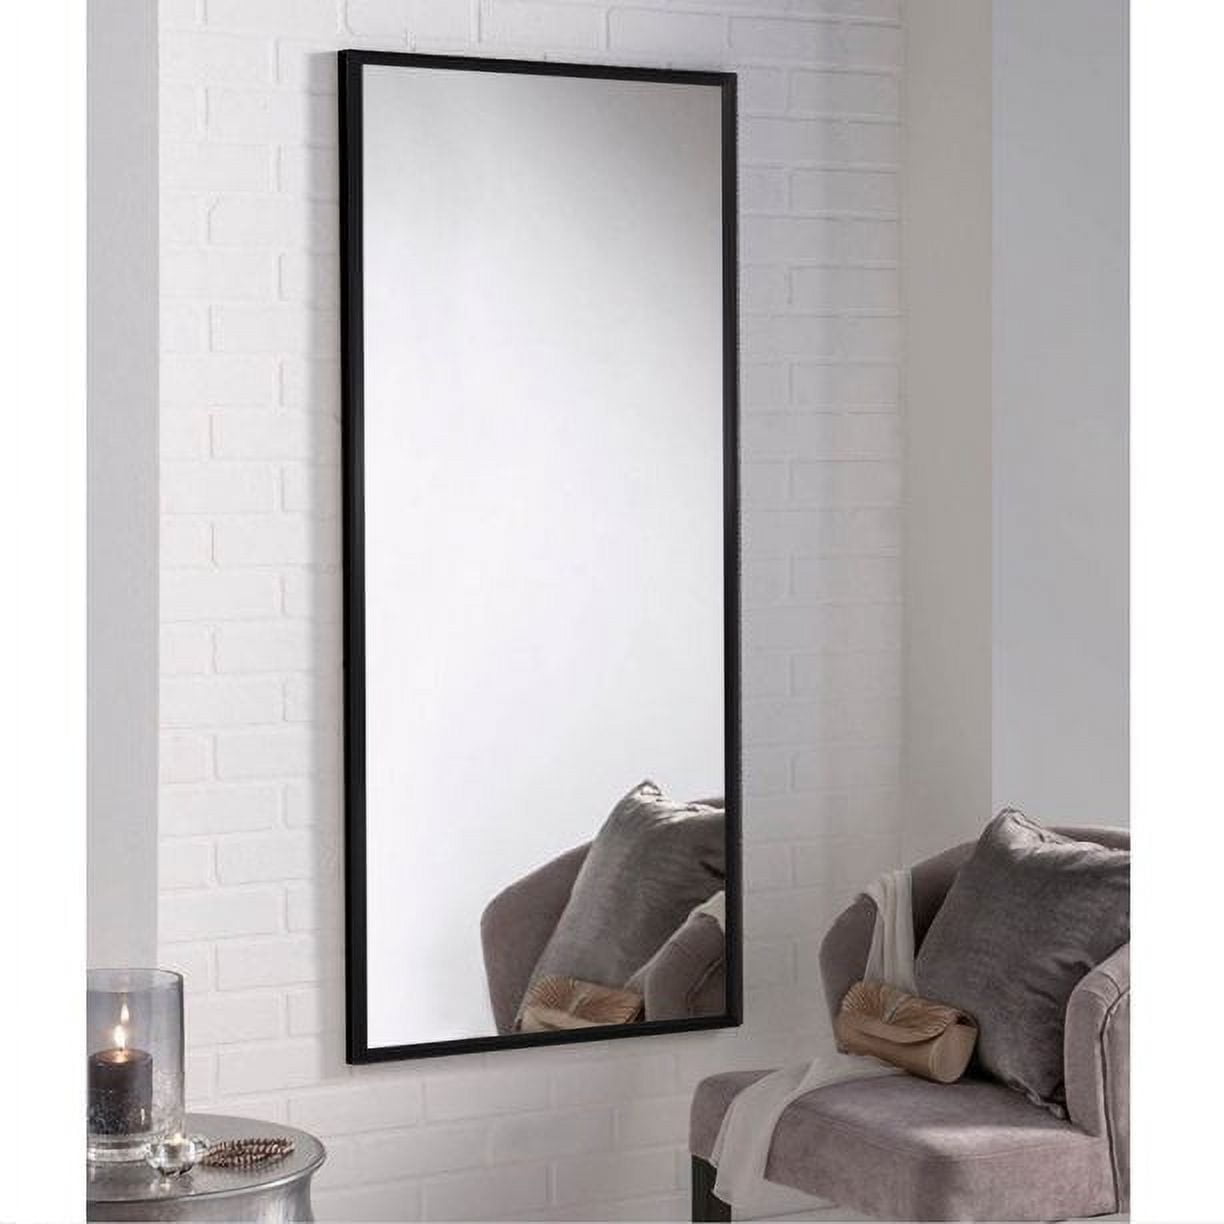 MIRUO 43x16 Mirror Full Length Wall Mirrors Full Body Mirror Bathroom Mirror Living Room Wall Decor Black Mirror Hanging Mirror Full Mirror Full